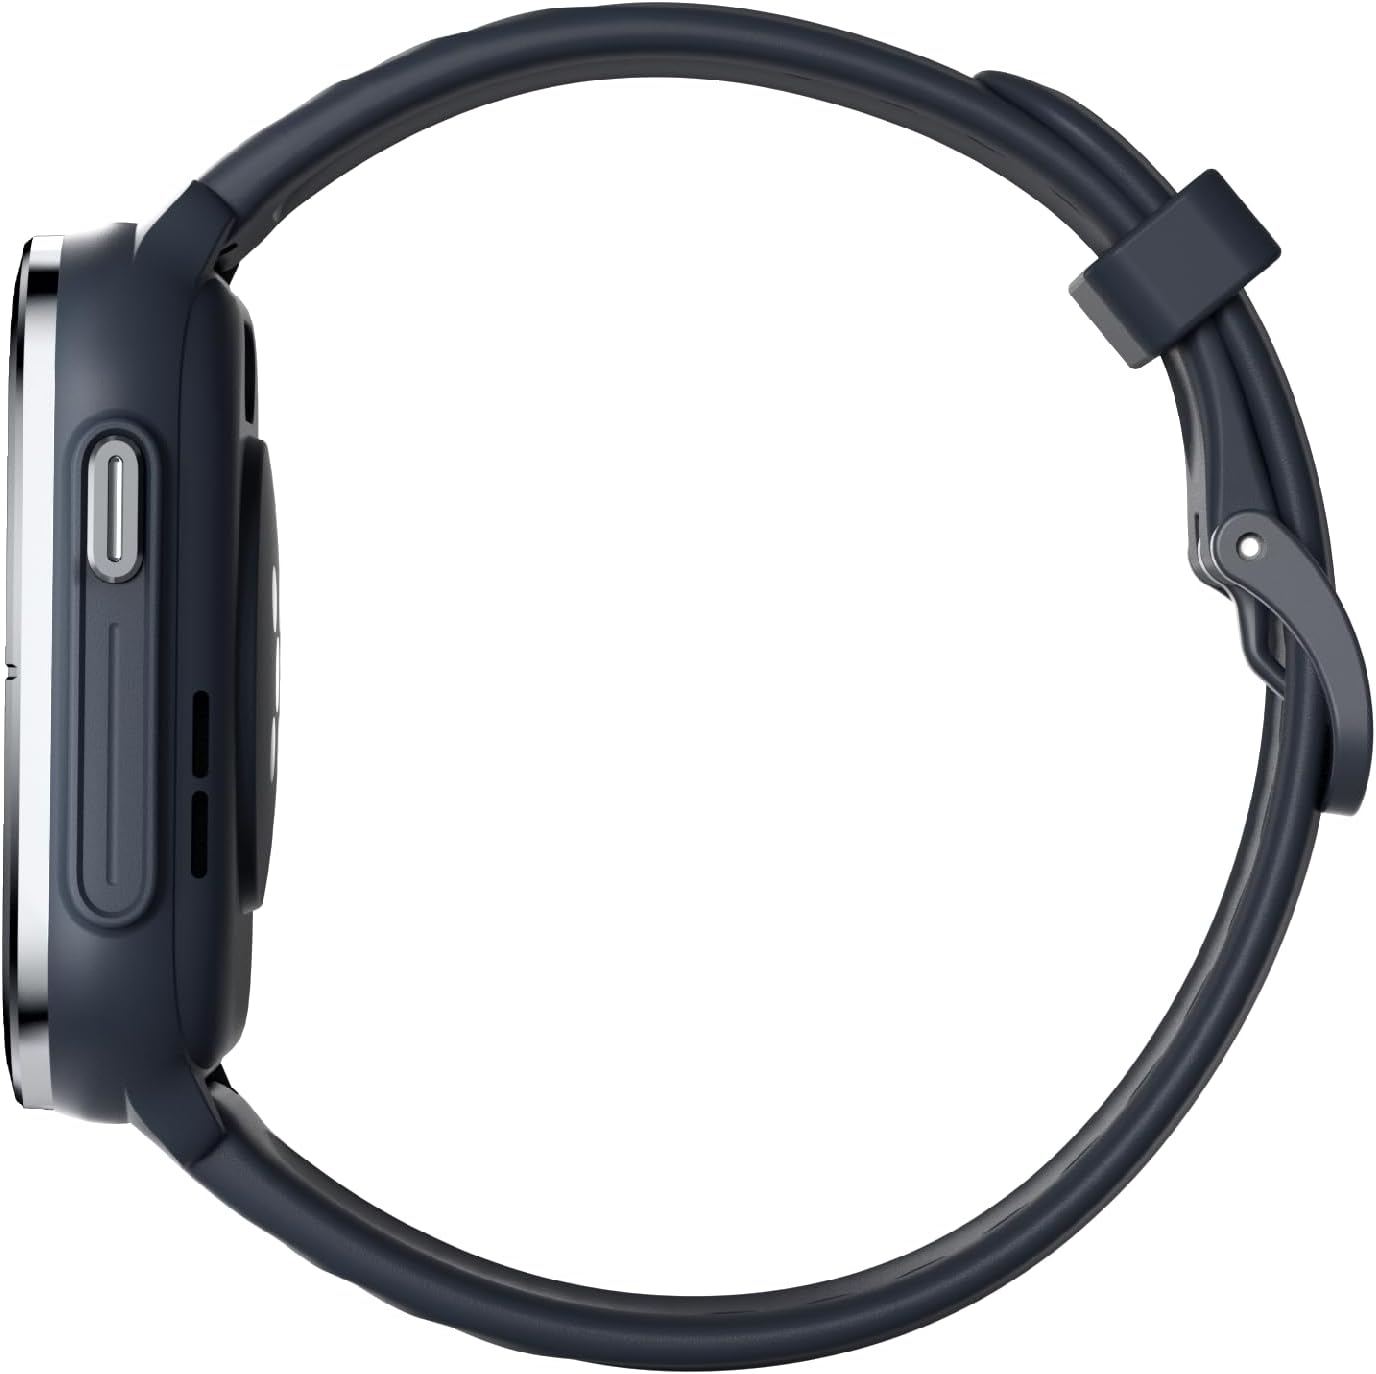 Mibro Smart Watch C3 1.85 HD Display Bluetooth Calling by Xiaomi - Black